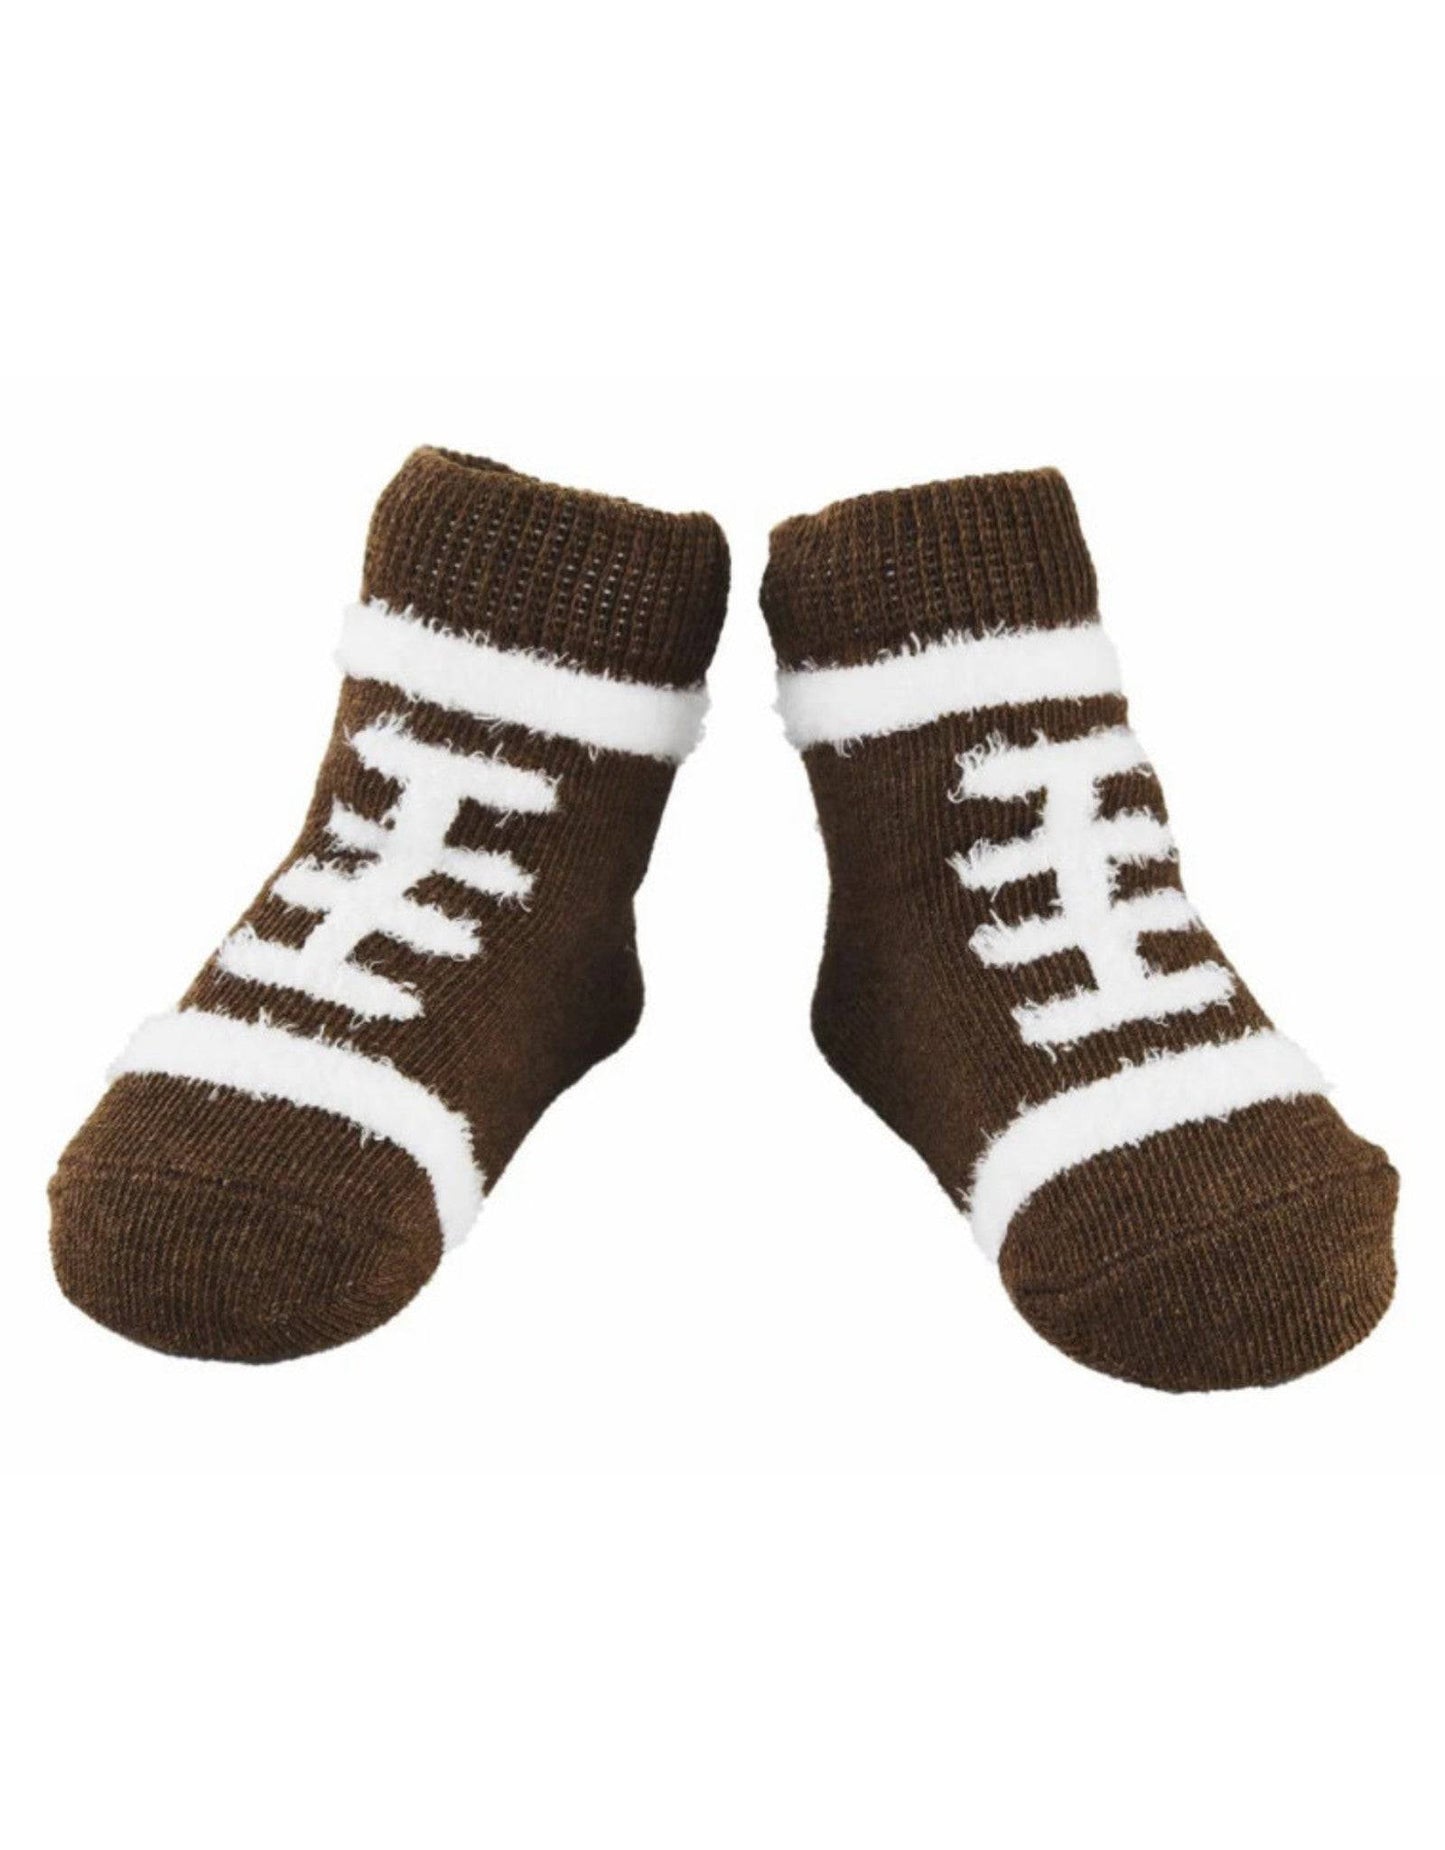 Mud Pie - Football Chenille Socks - Findlay Rowe Designs